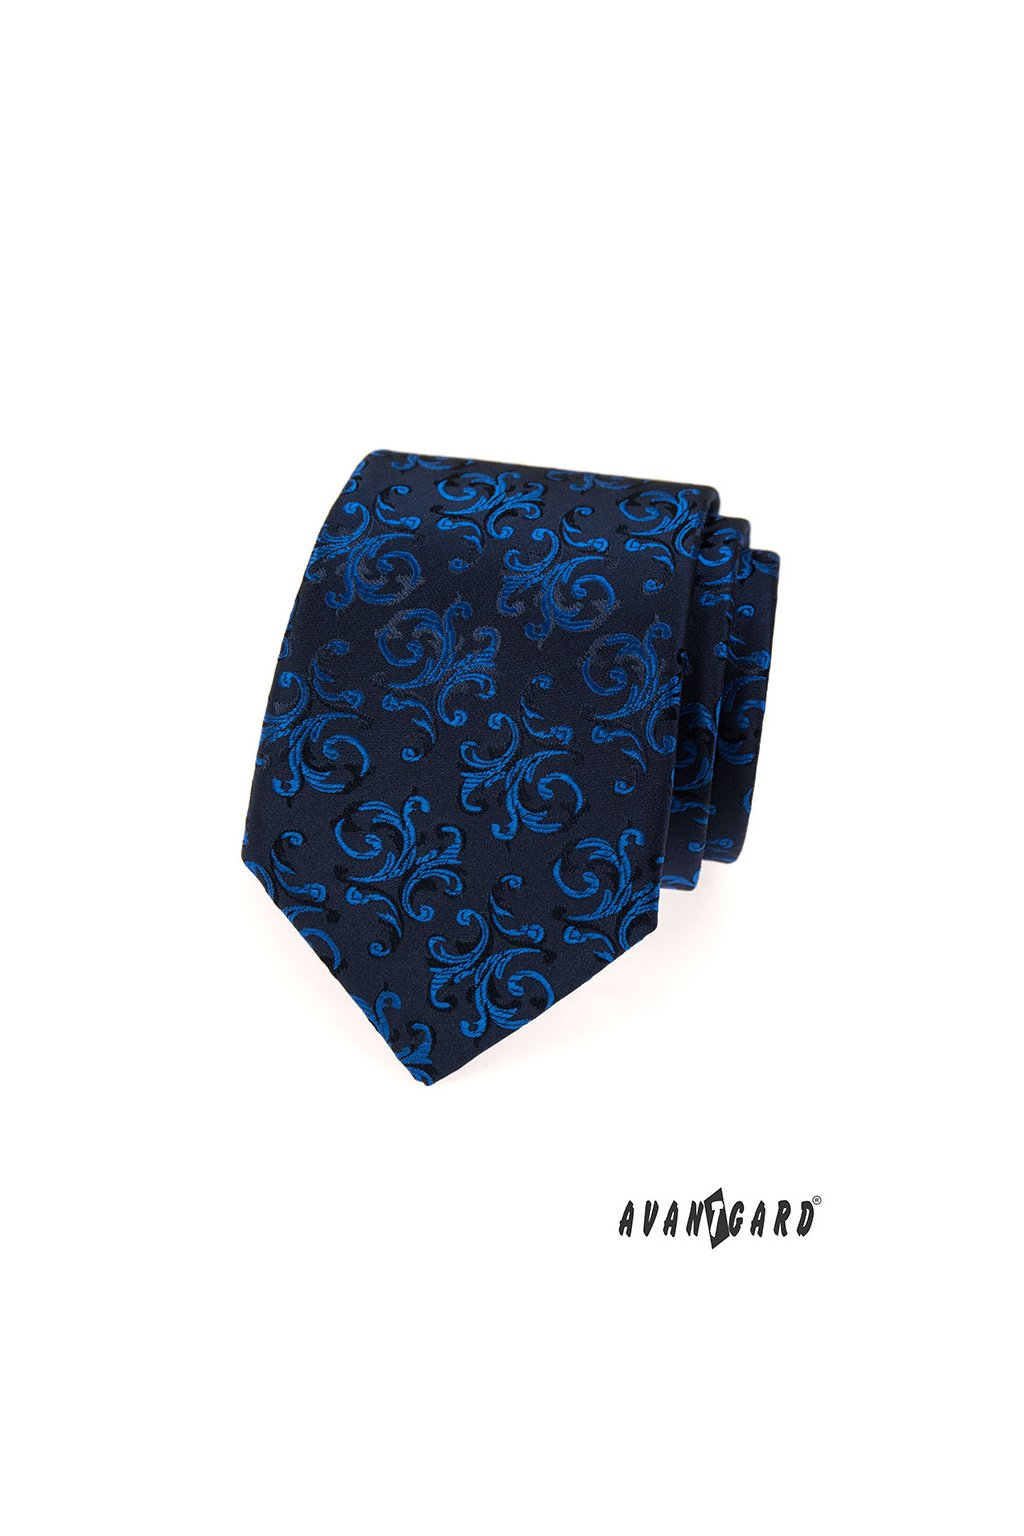 Tmavě modrá kravata s modrým zdobeným vzorem